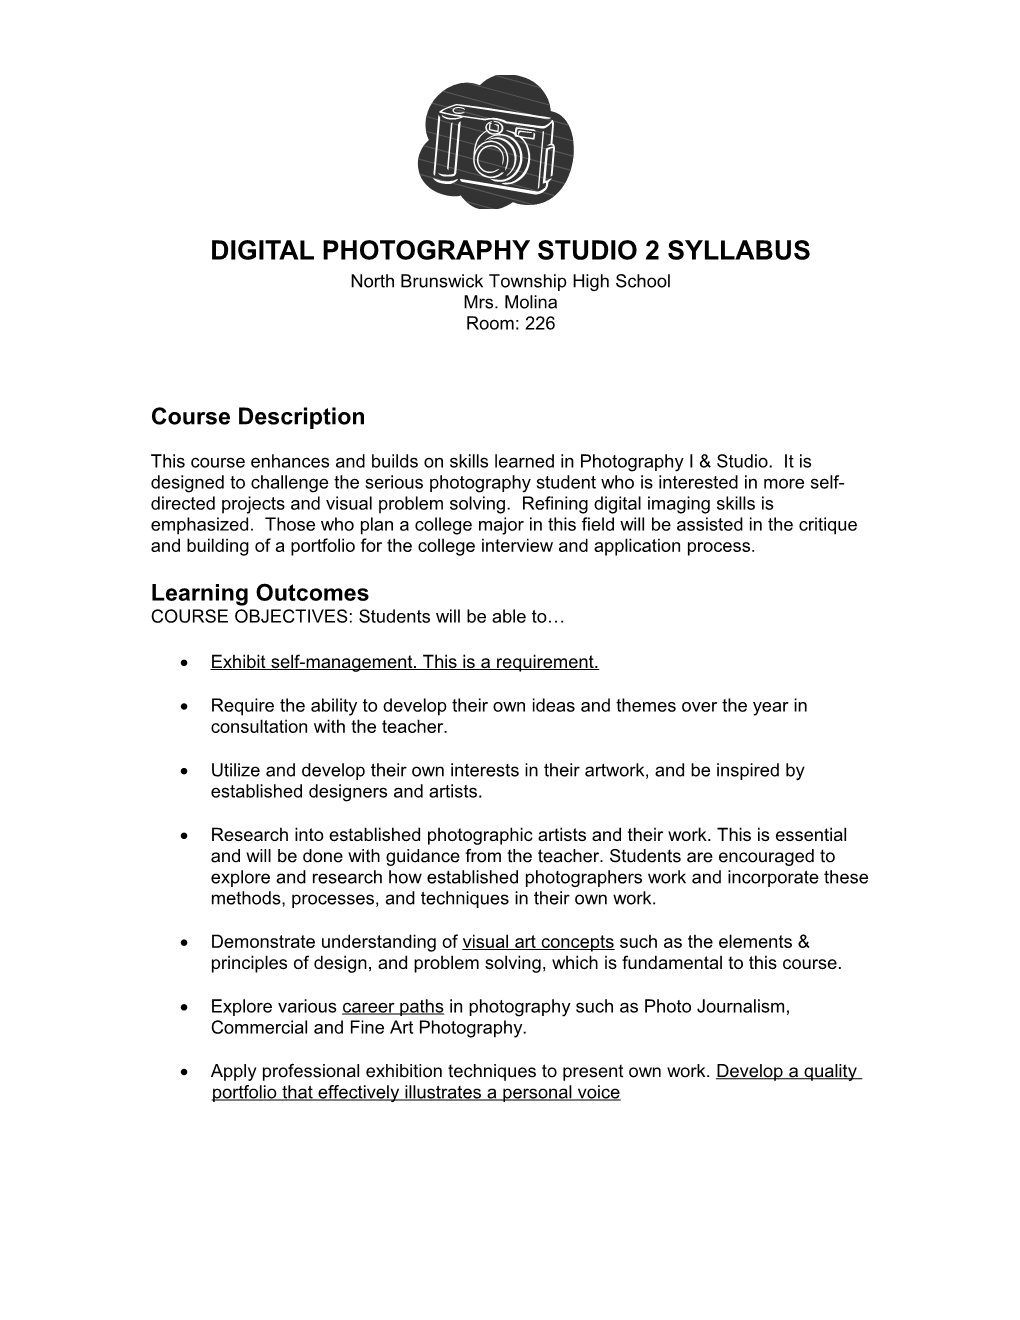 Digital Photography Studio 2Syllabus